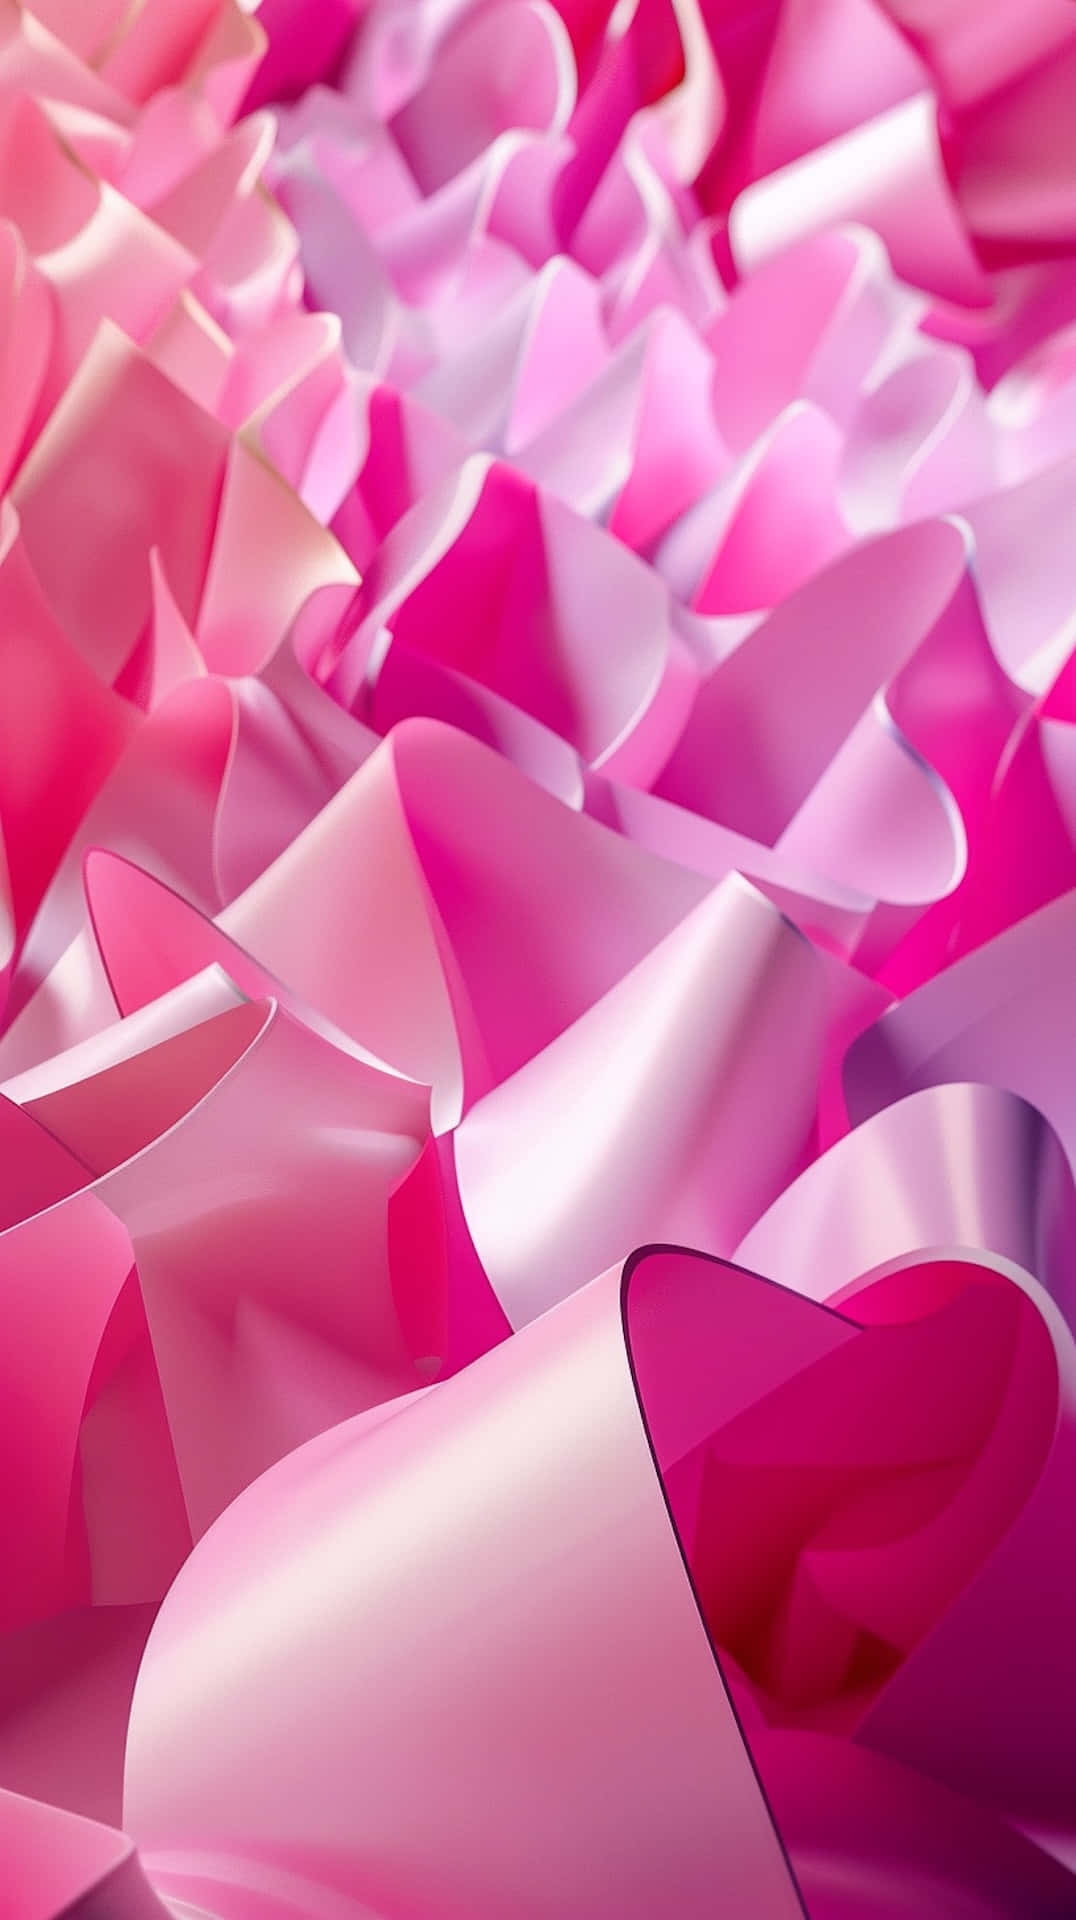 Abstract Pink Heart Patterns Wallpaper